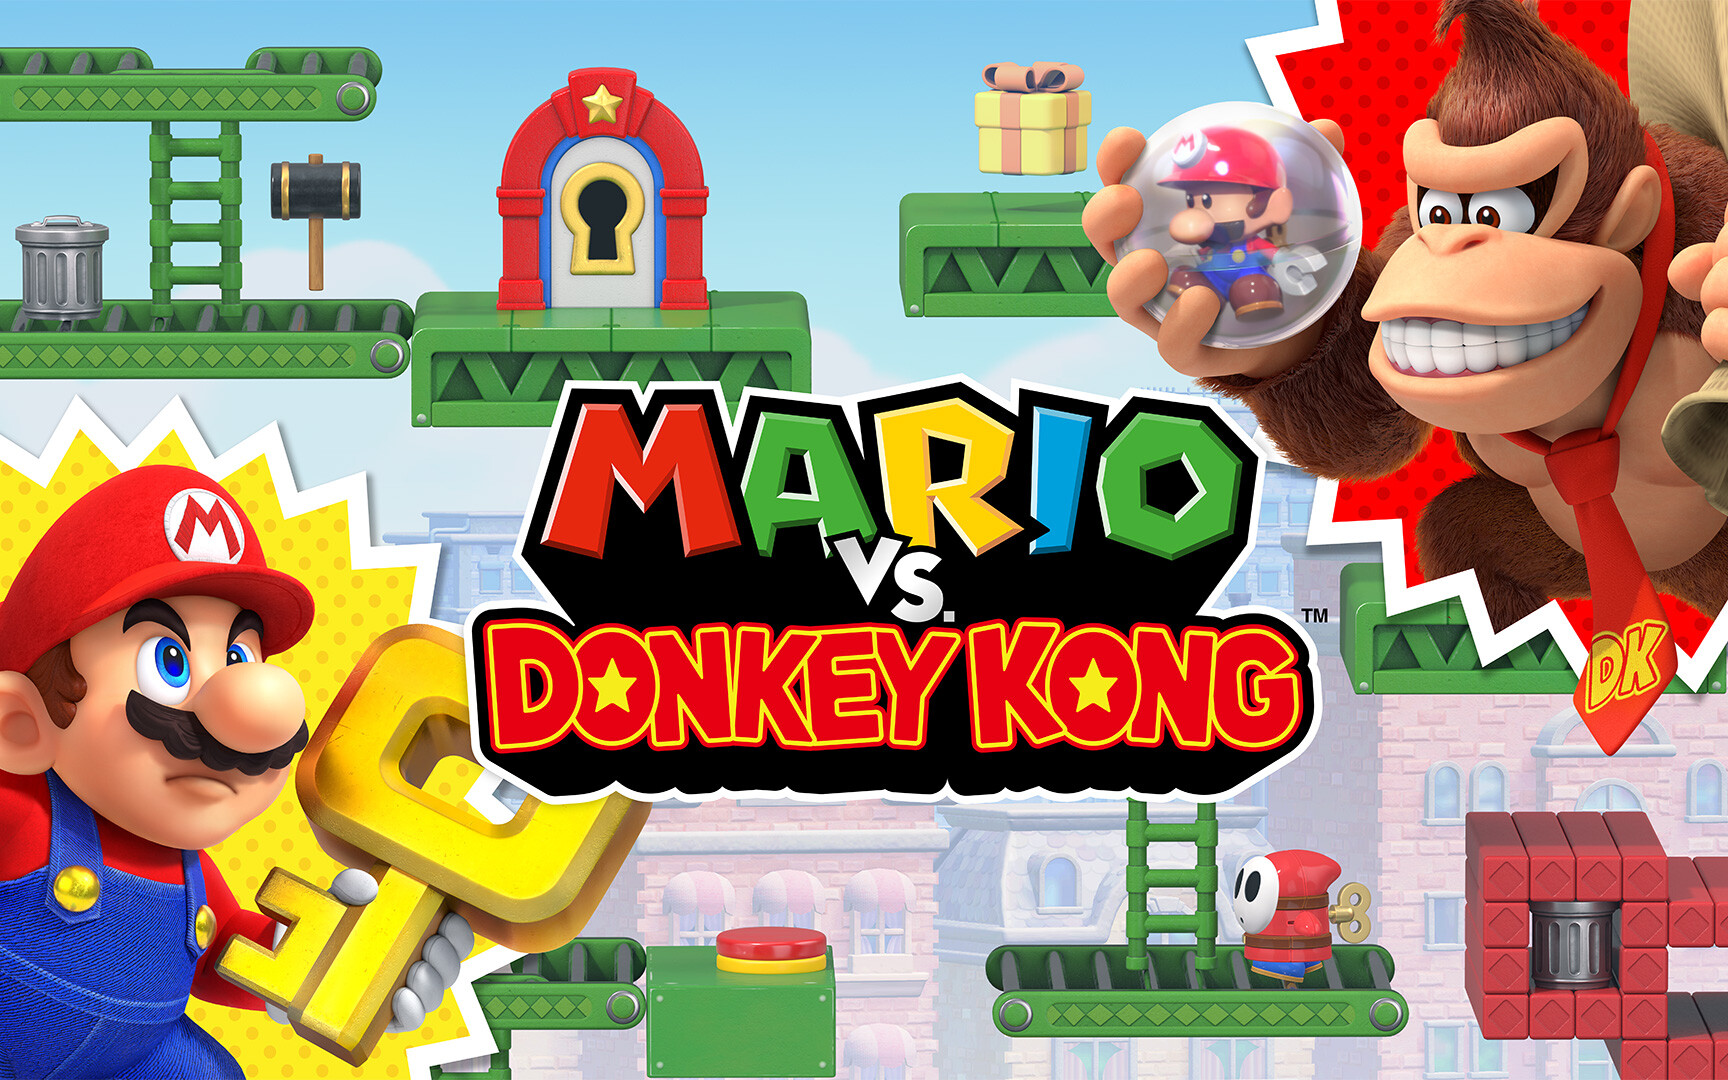 Mario vs. Donkey Kong remake - art